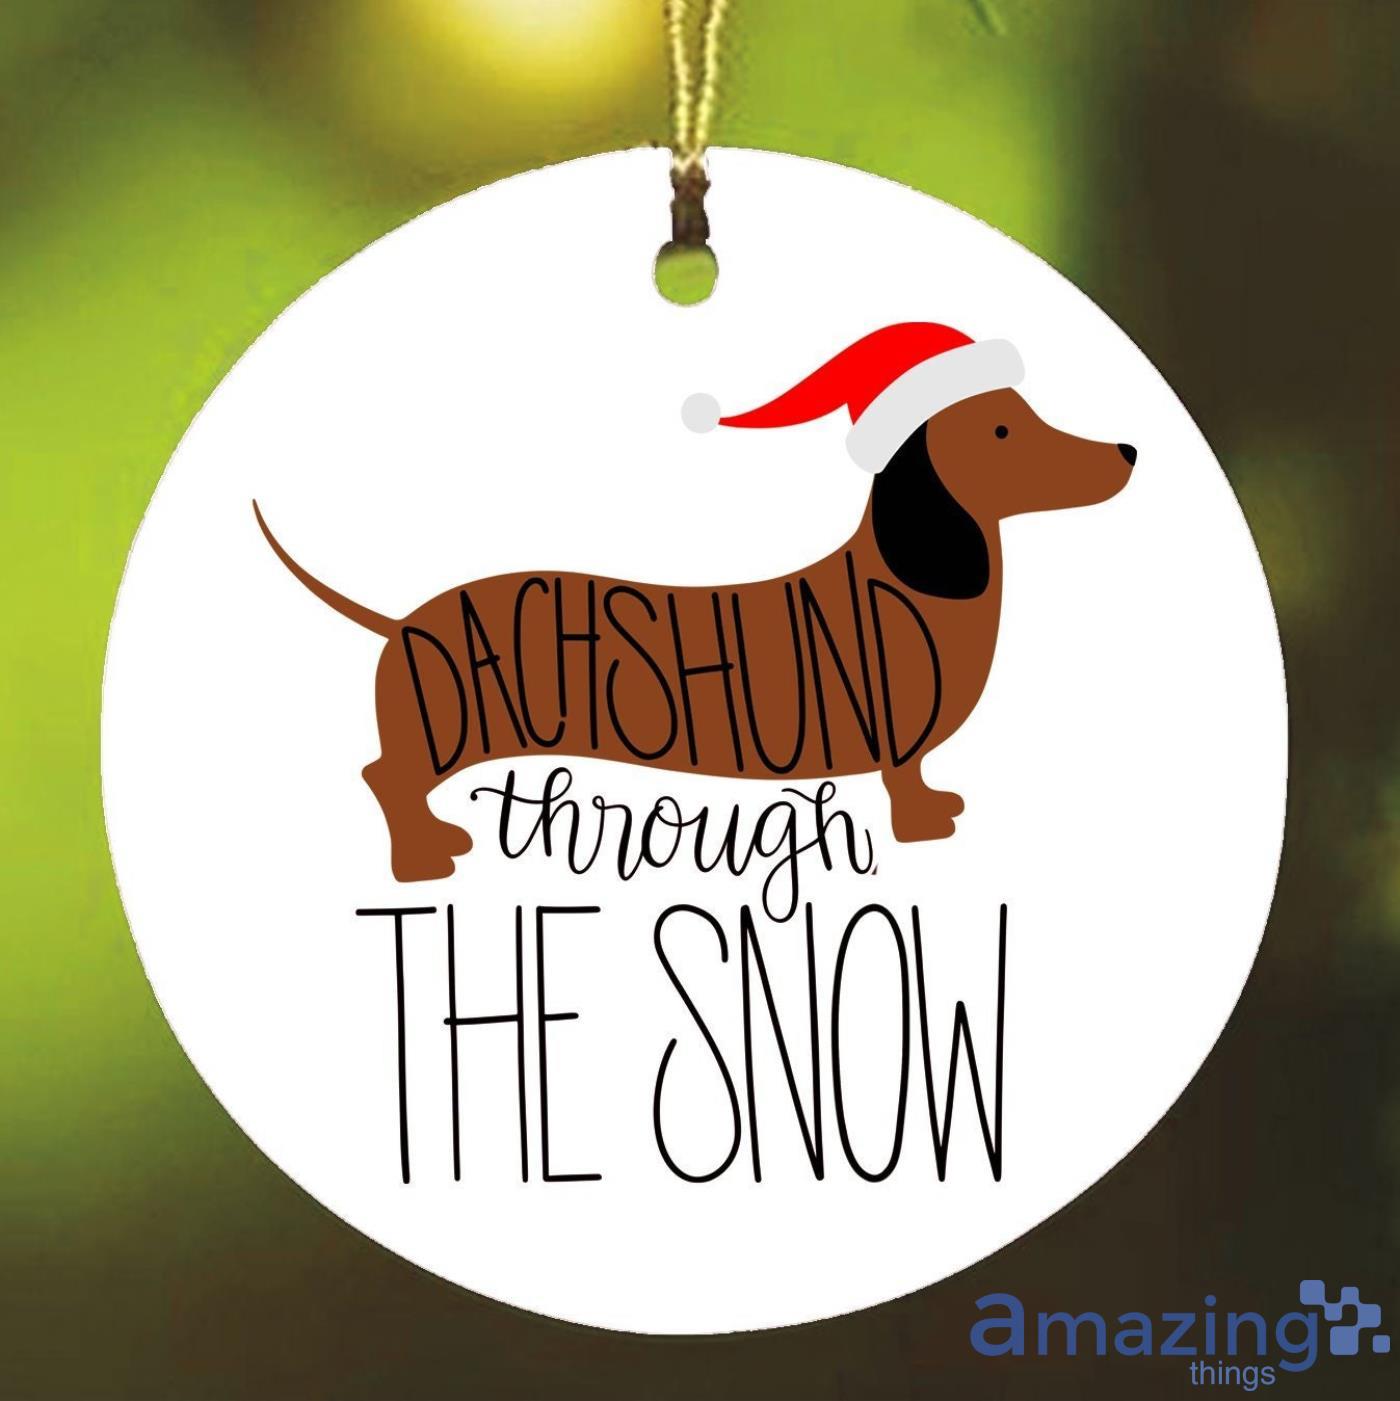 Dachshund Through The Snow Ornament Funny Dog Cute Product Photo 1